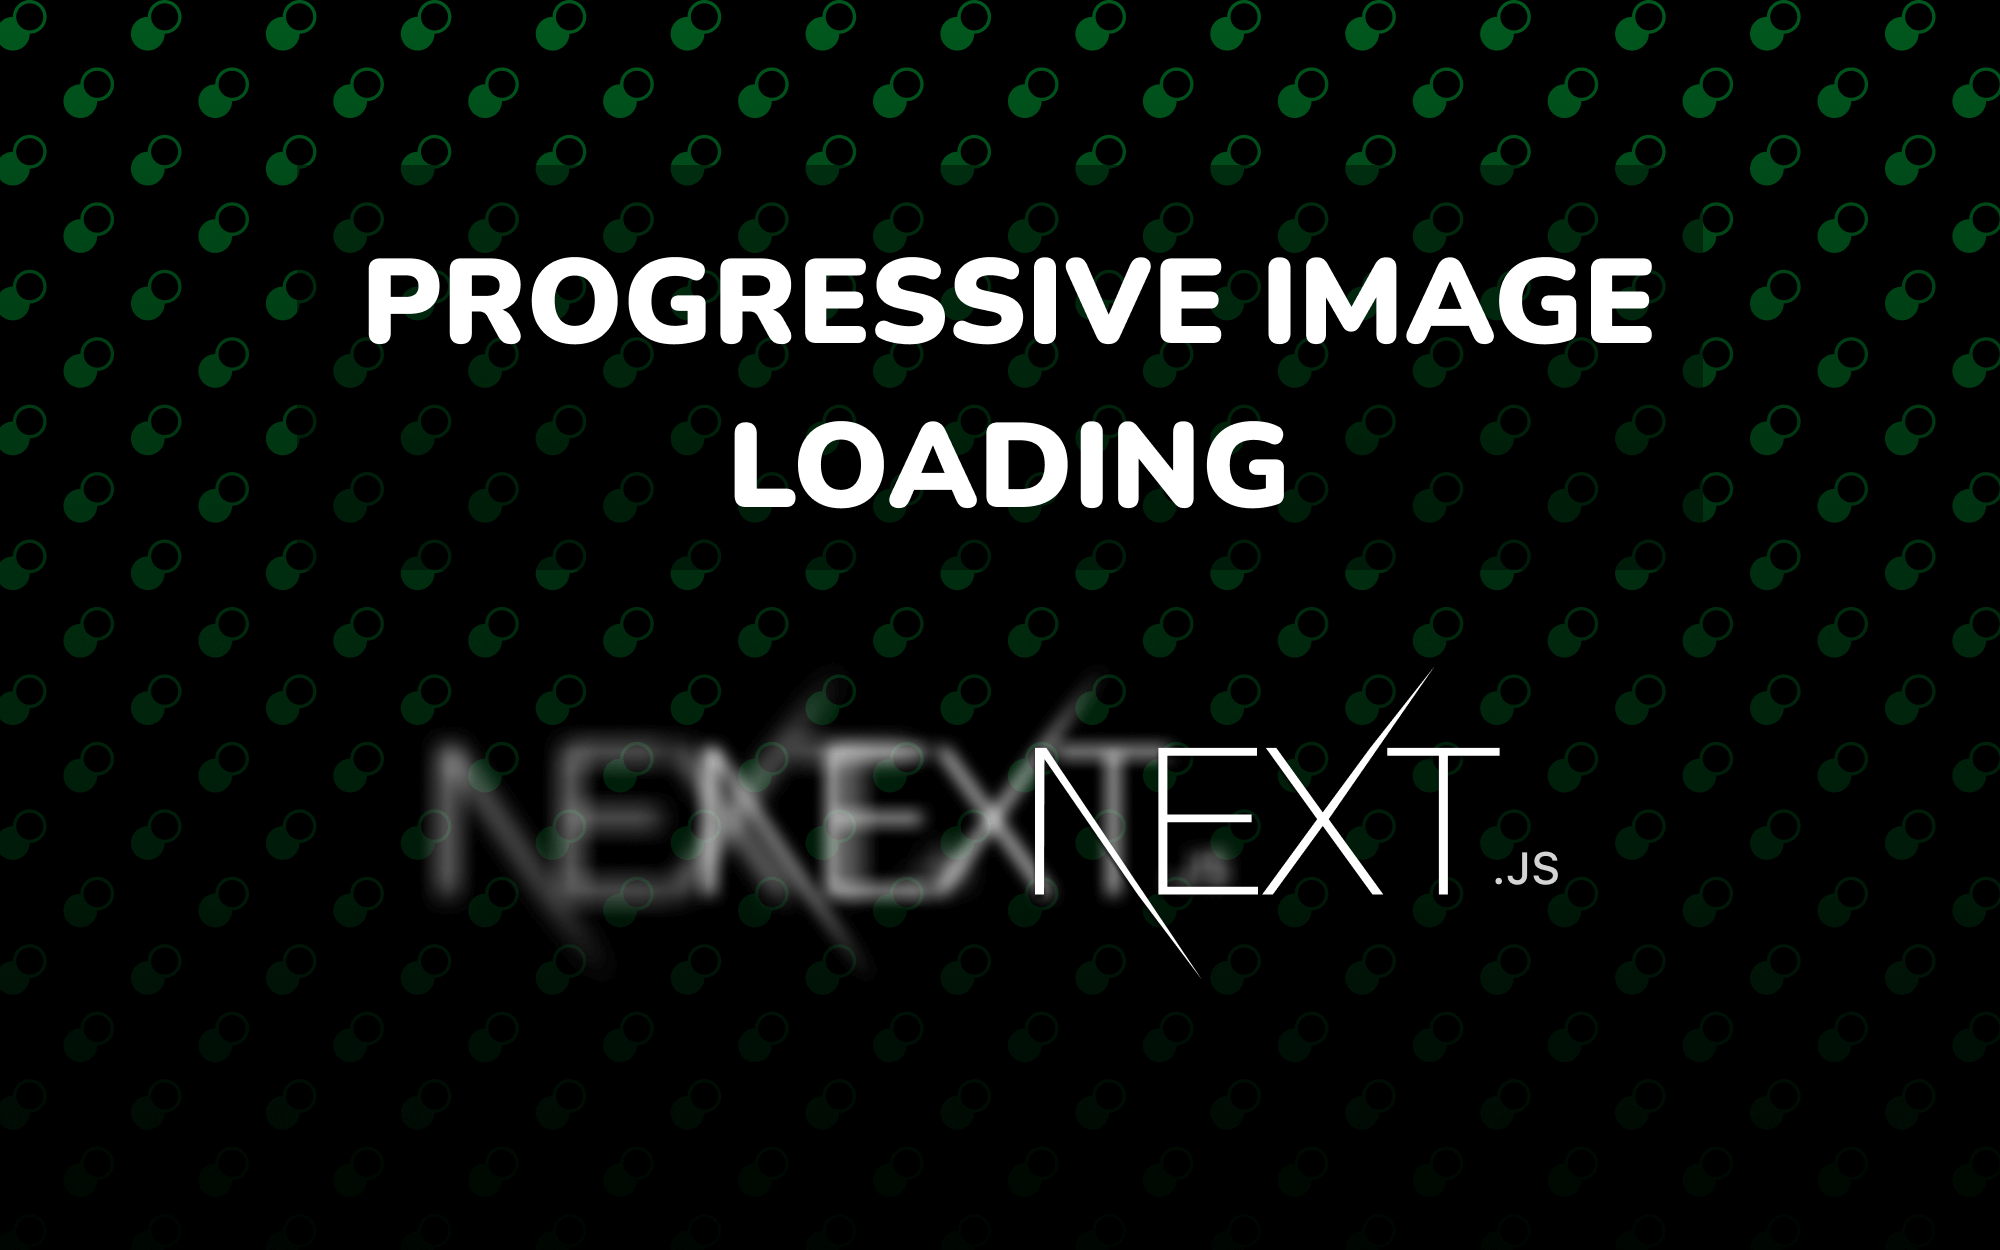 Progressive Image Loading with NextJS